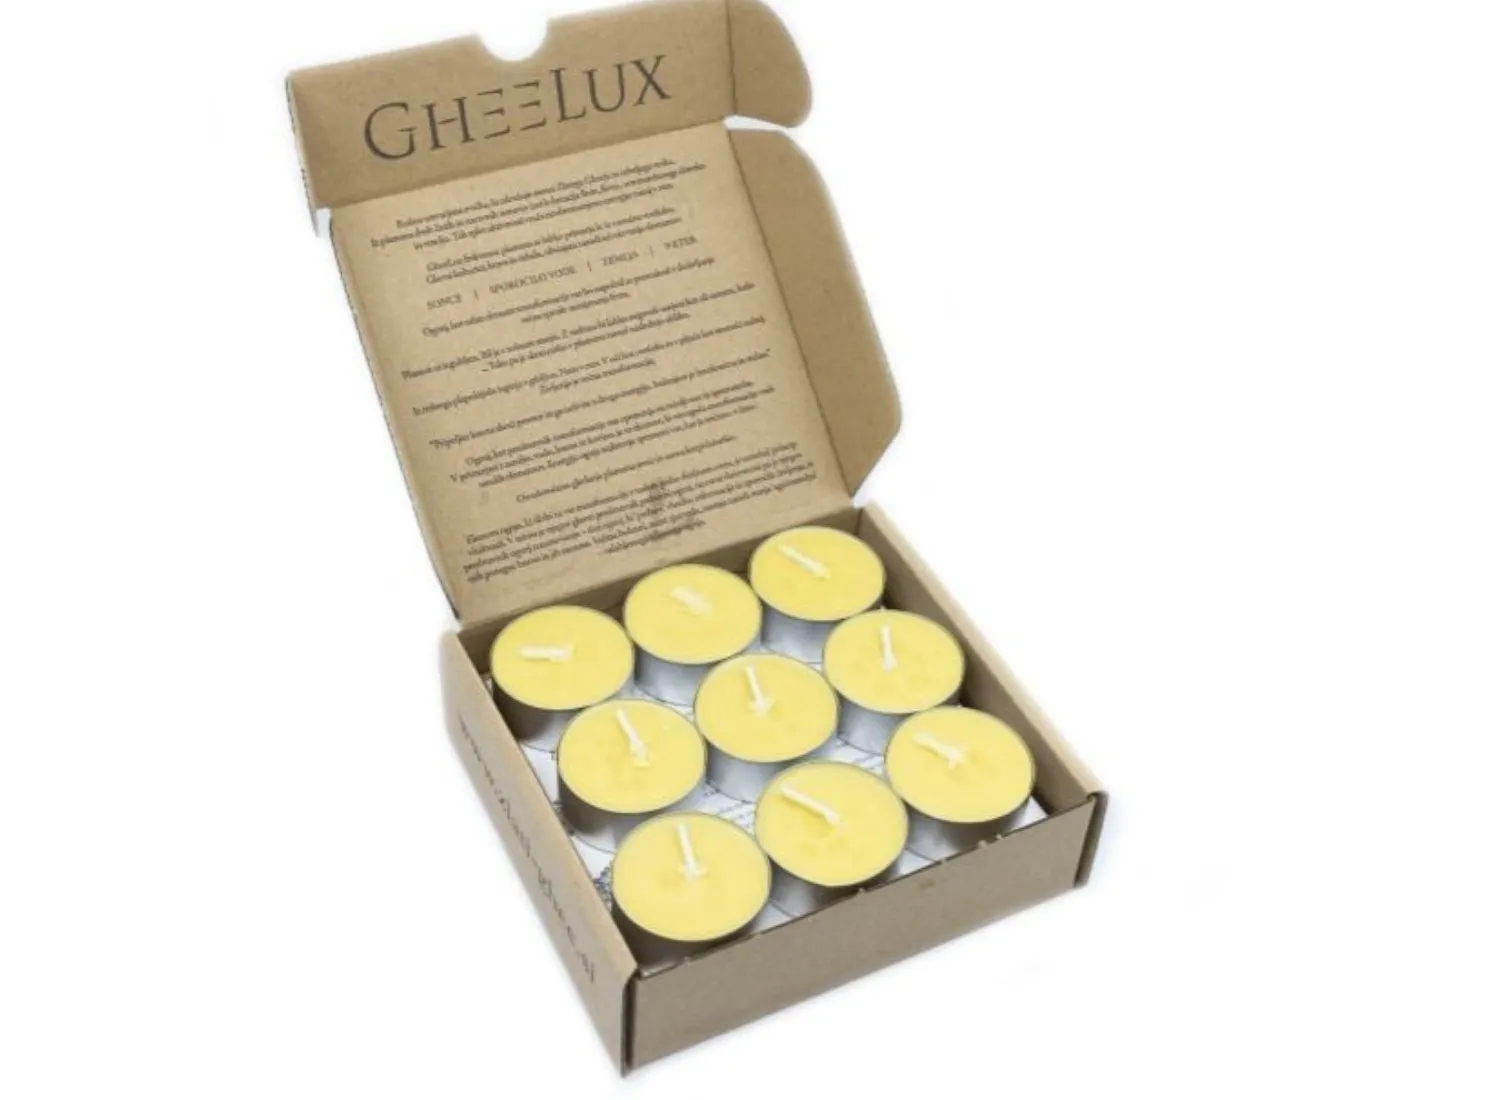 GheeLux - svijećice na bazi Ghee-a